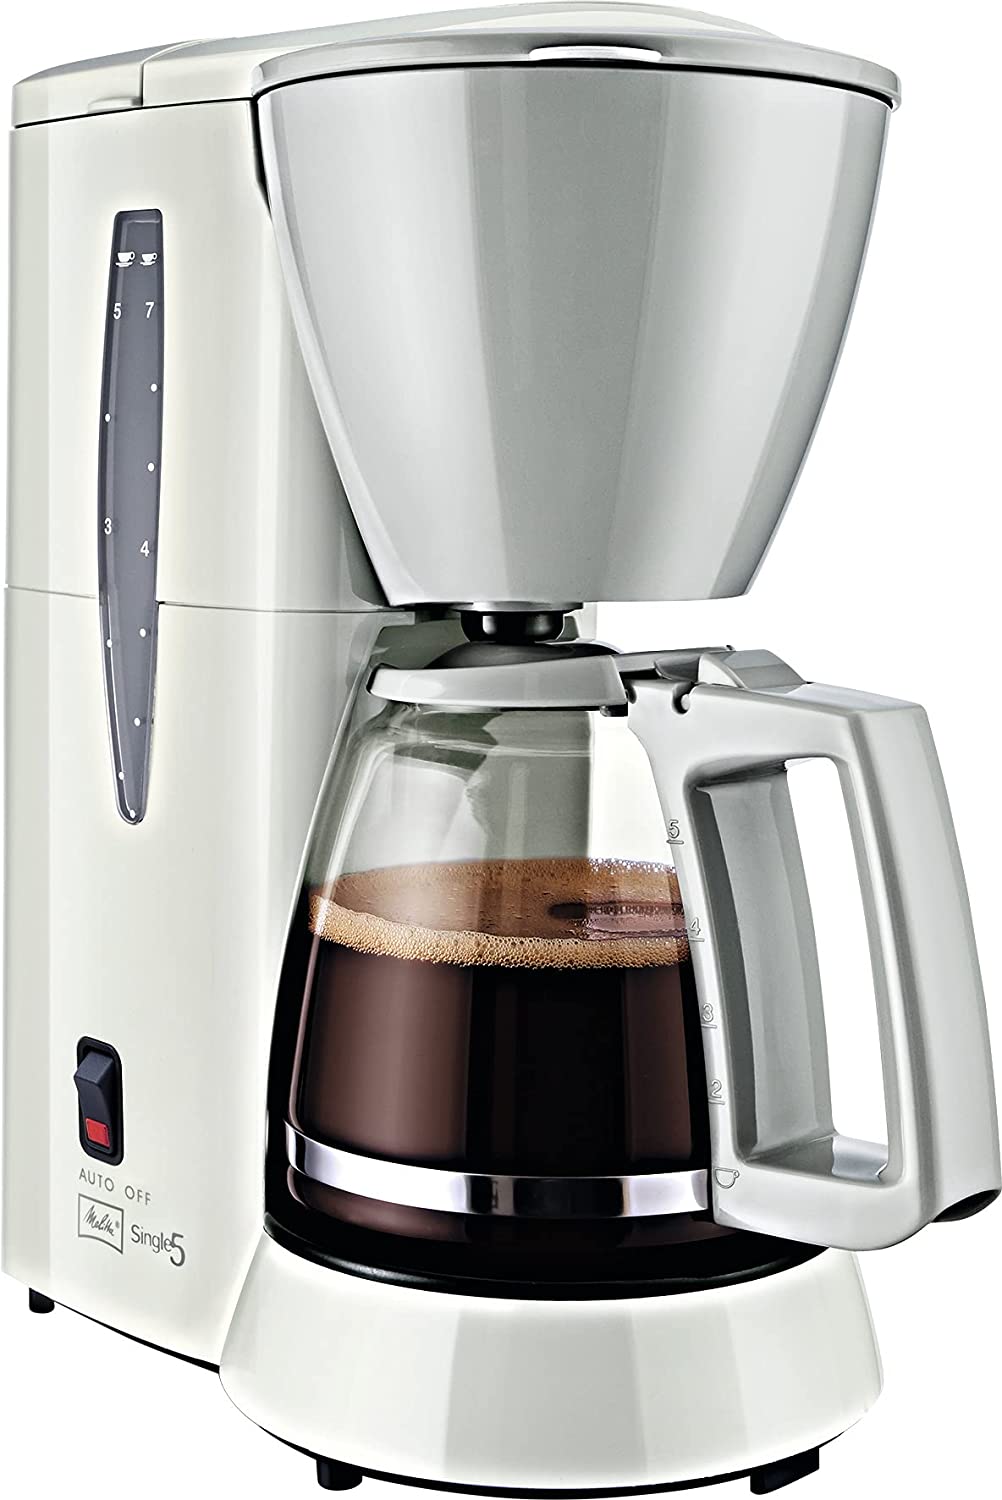 Melitta 720-1 Single Kaffeefiltermaschine 5 M, glass teapot\'s friend, drip stop, Auto power off weiß/grau